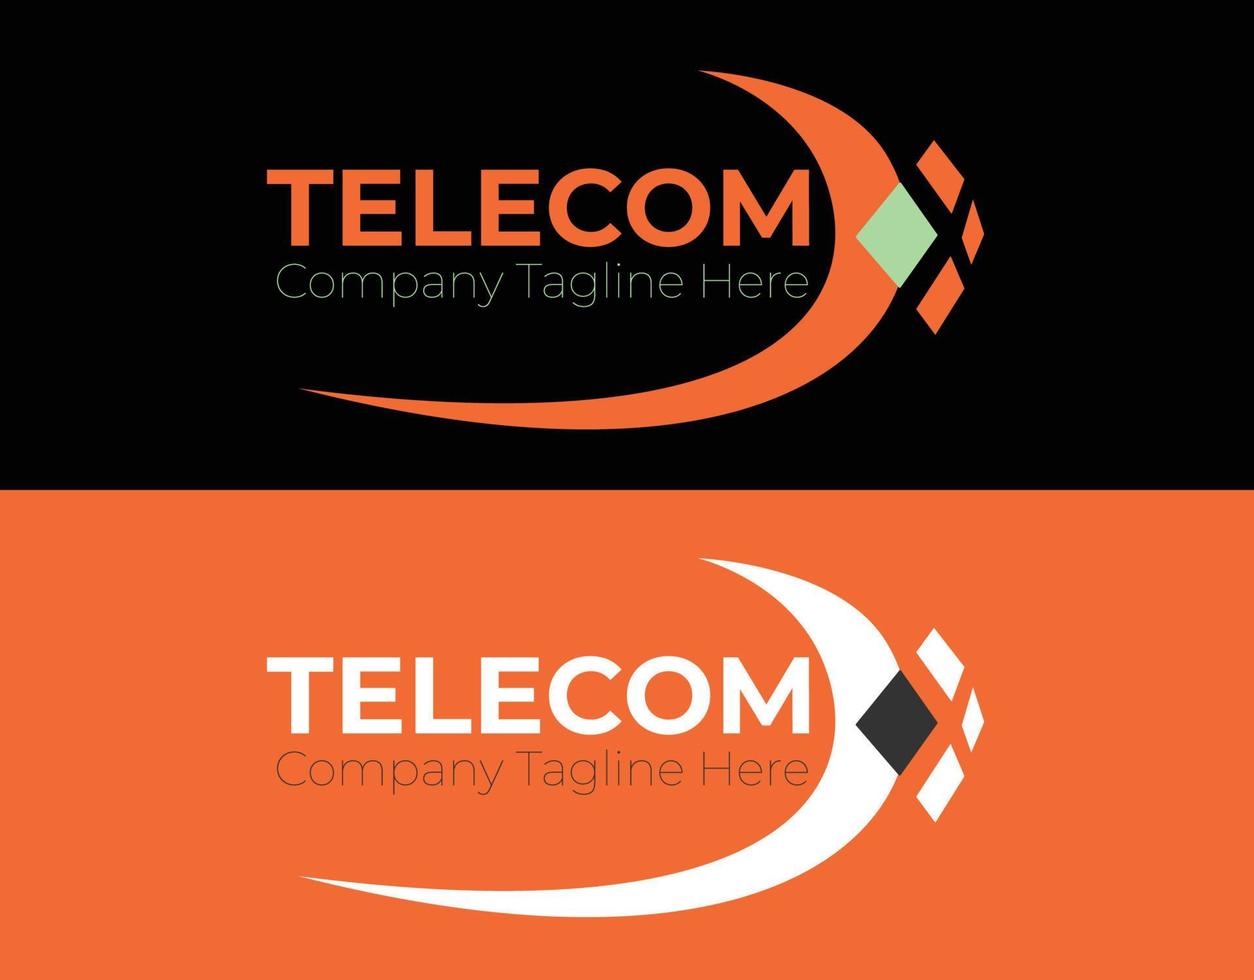 telekom-logo, logo-illustrationslogo des telekommunikationsunternehmens vektor